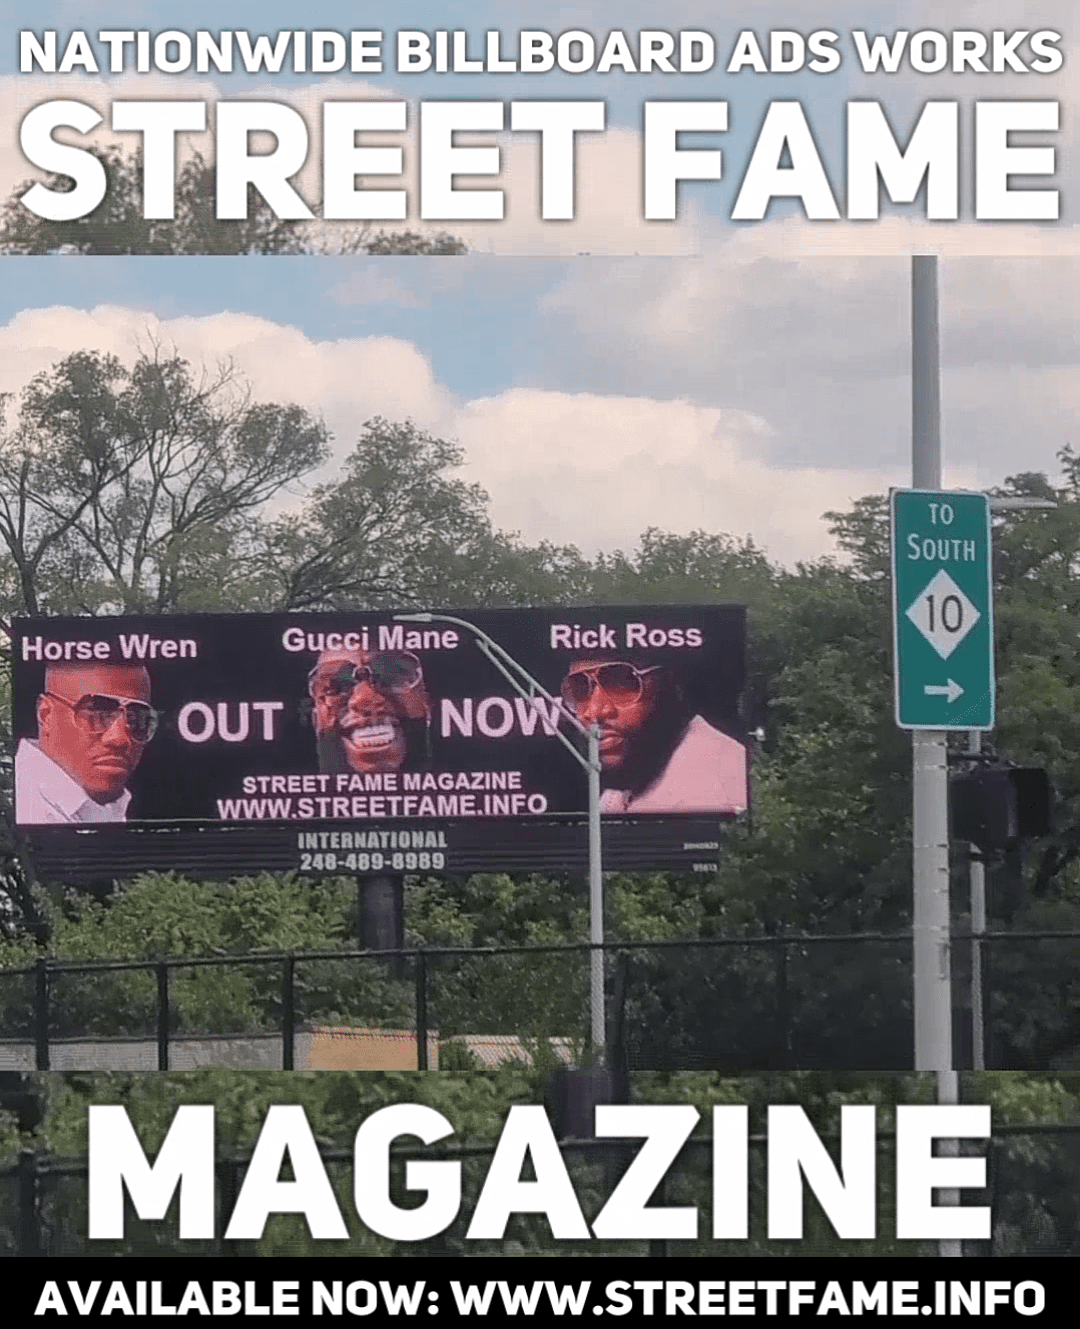 street fame magazine billboard